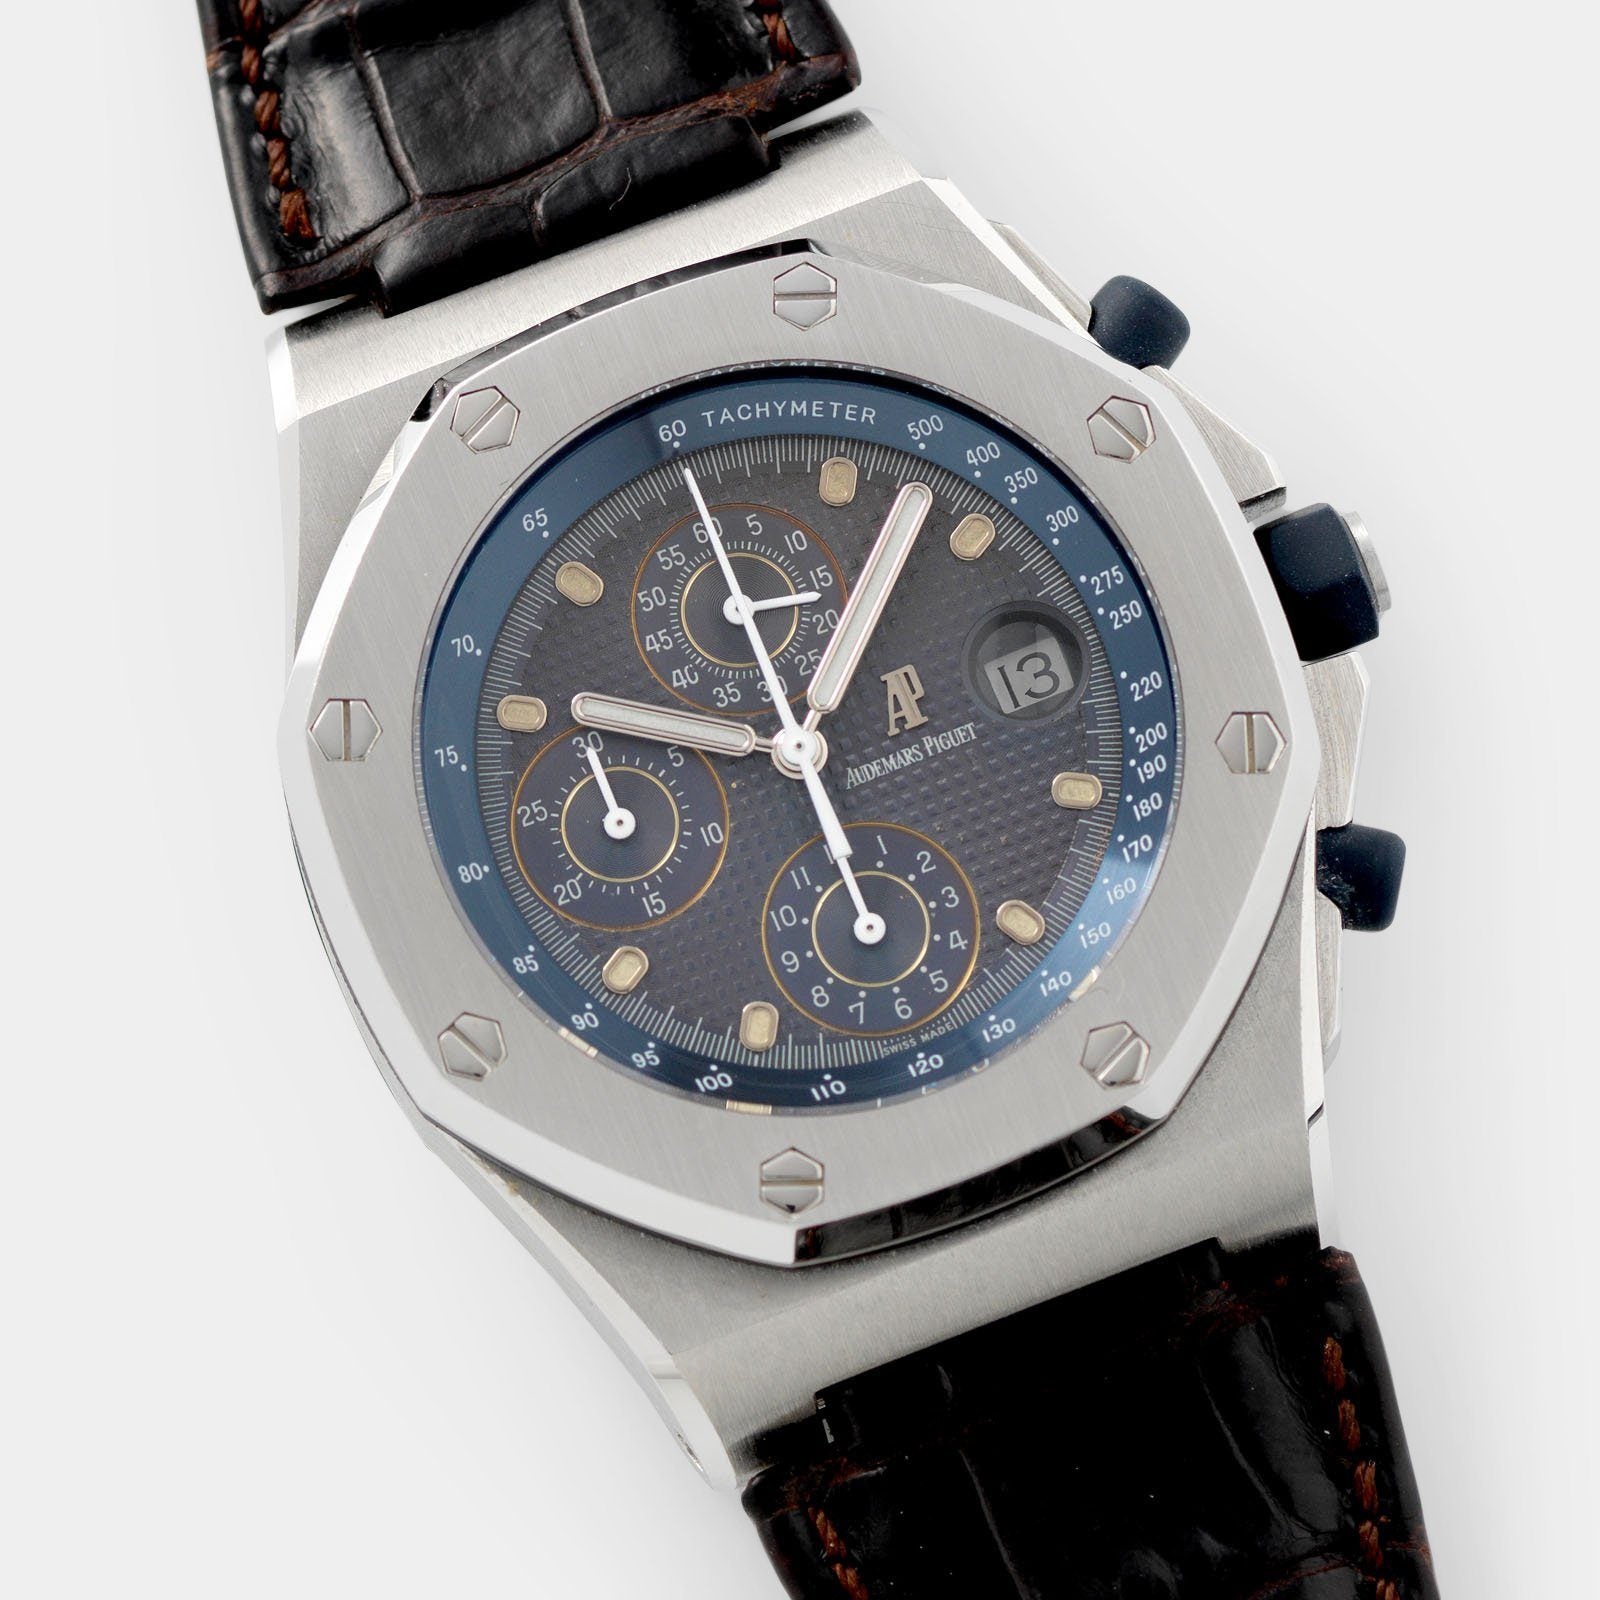 Audemars Piguet Royal Oak Offshore Chronograph Watch